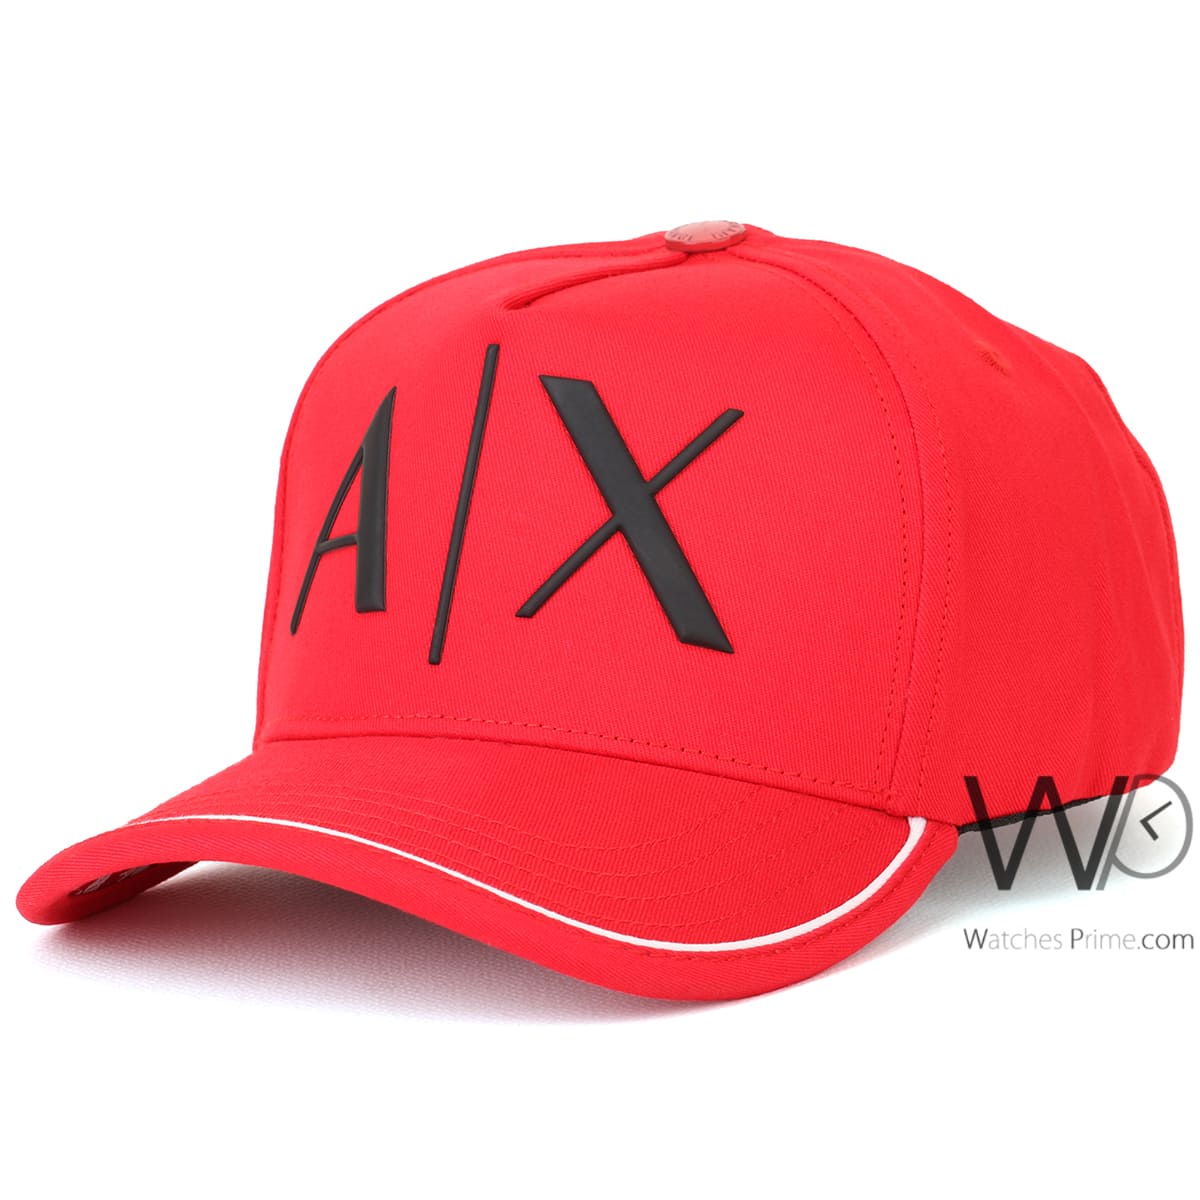 armani-exchange-baseball-cap-red-cotton-ax-hat